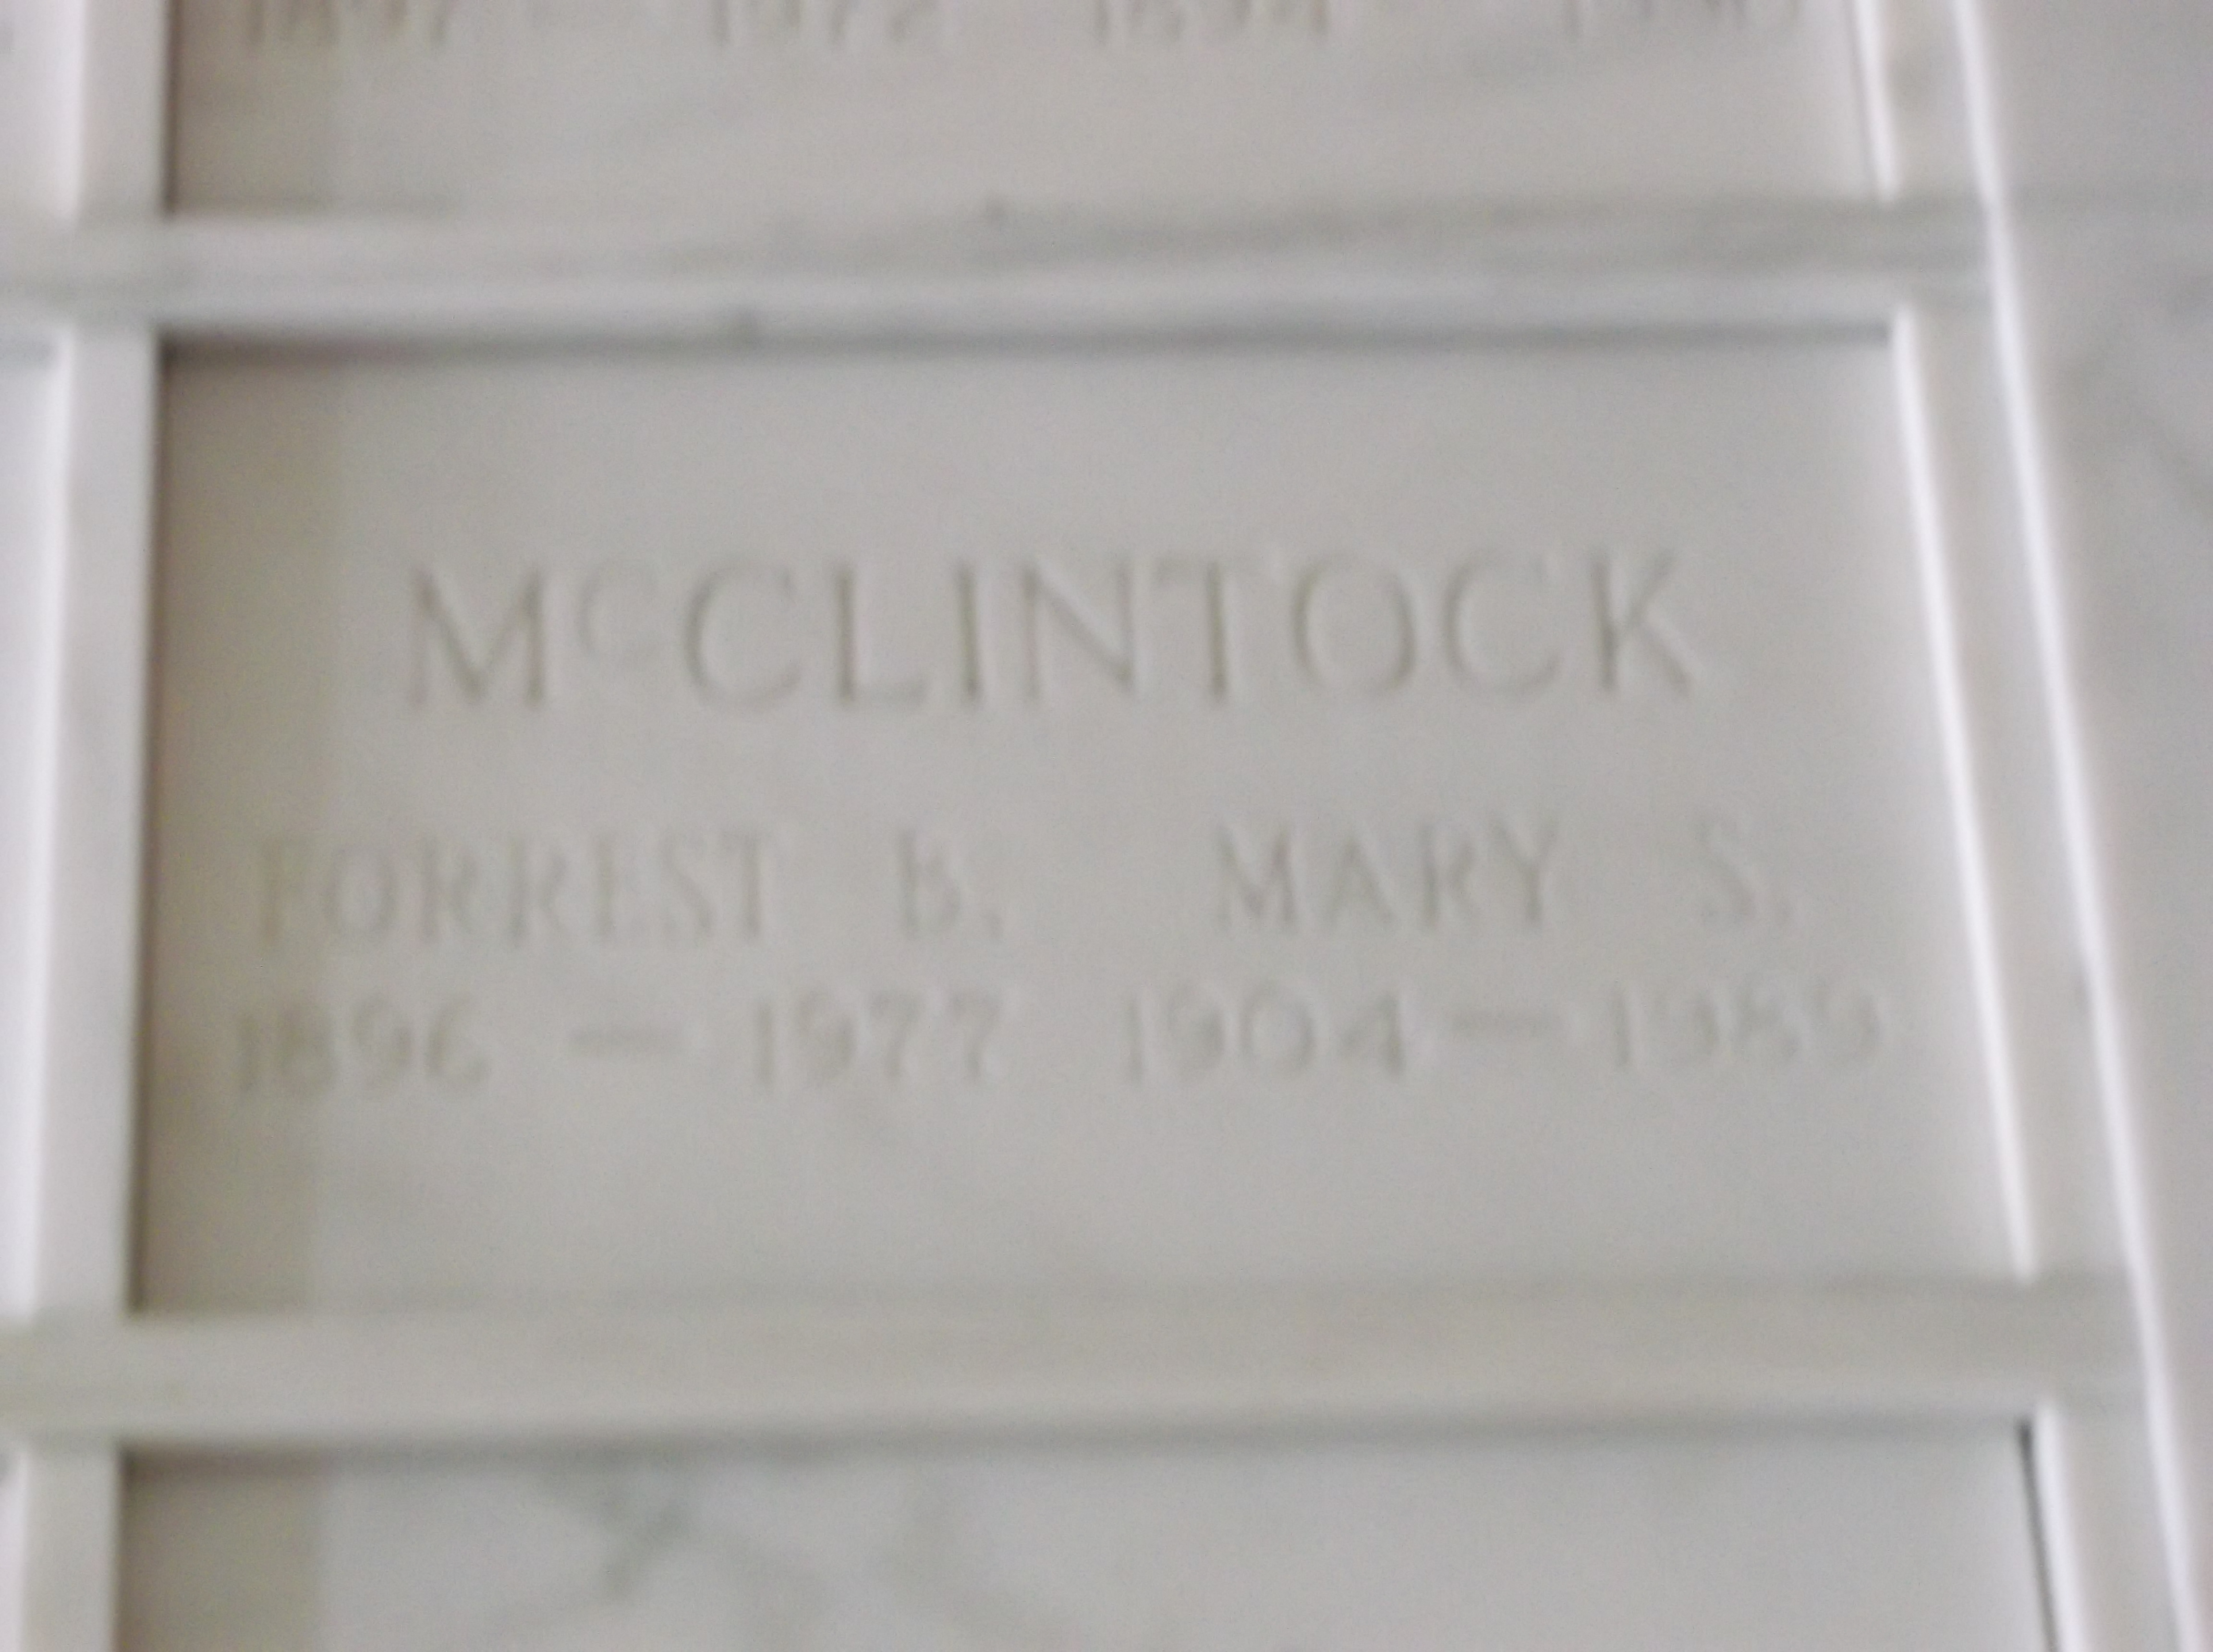 Mary S McClintock